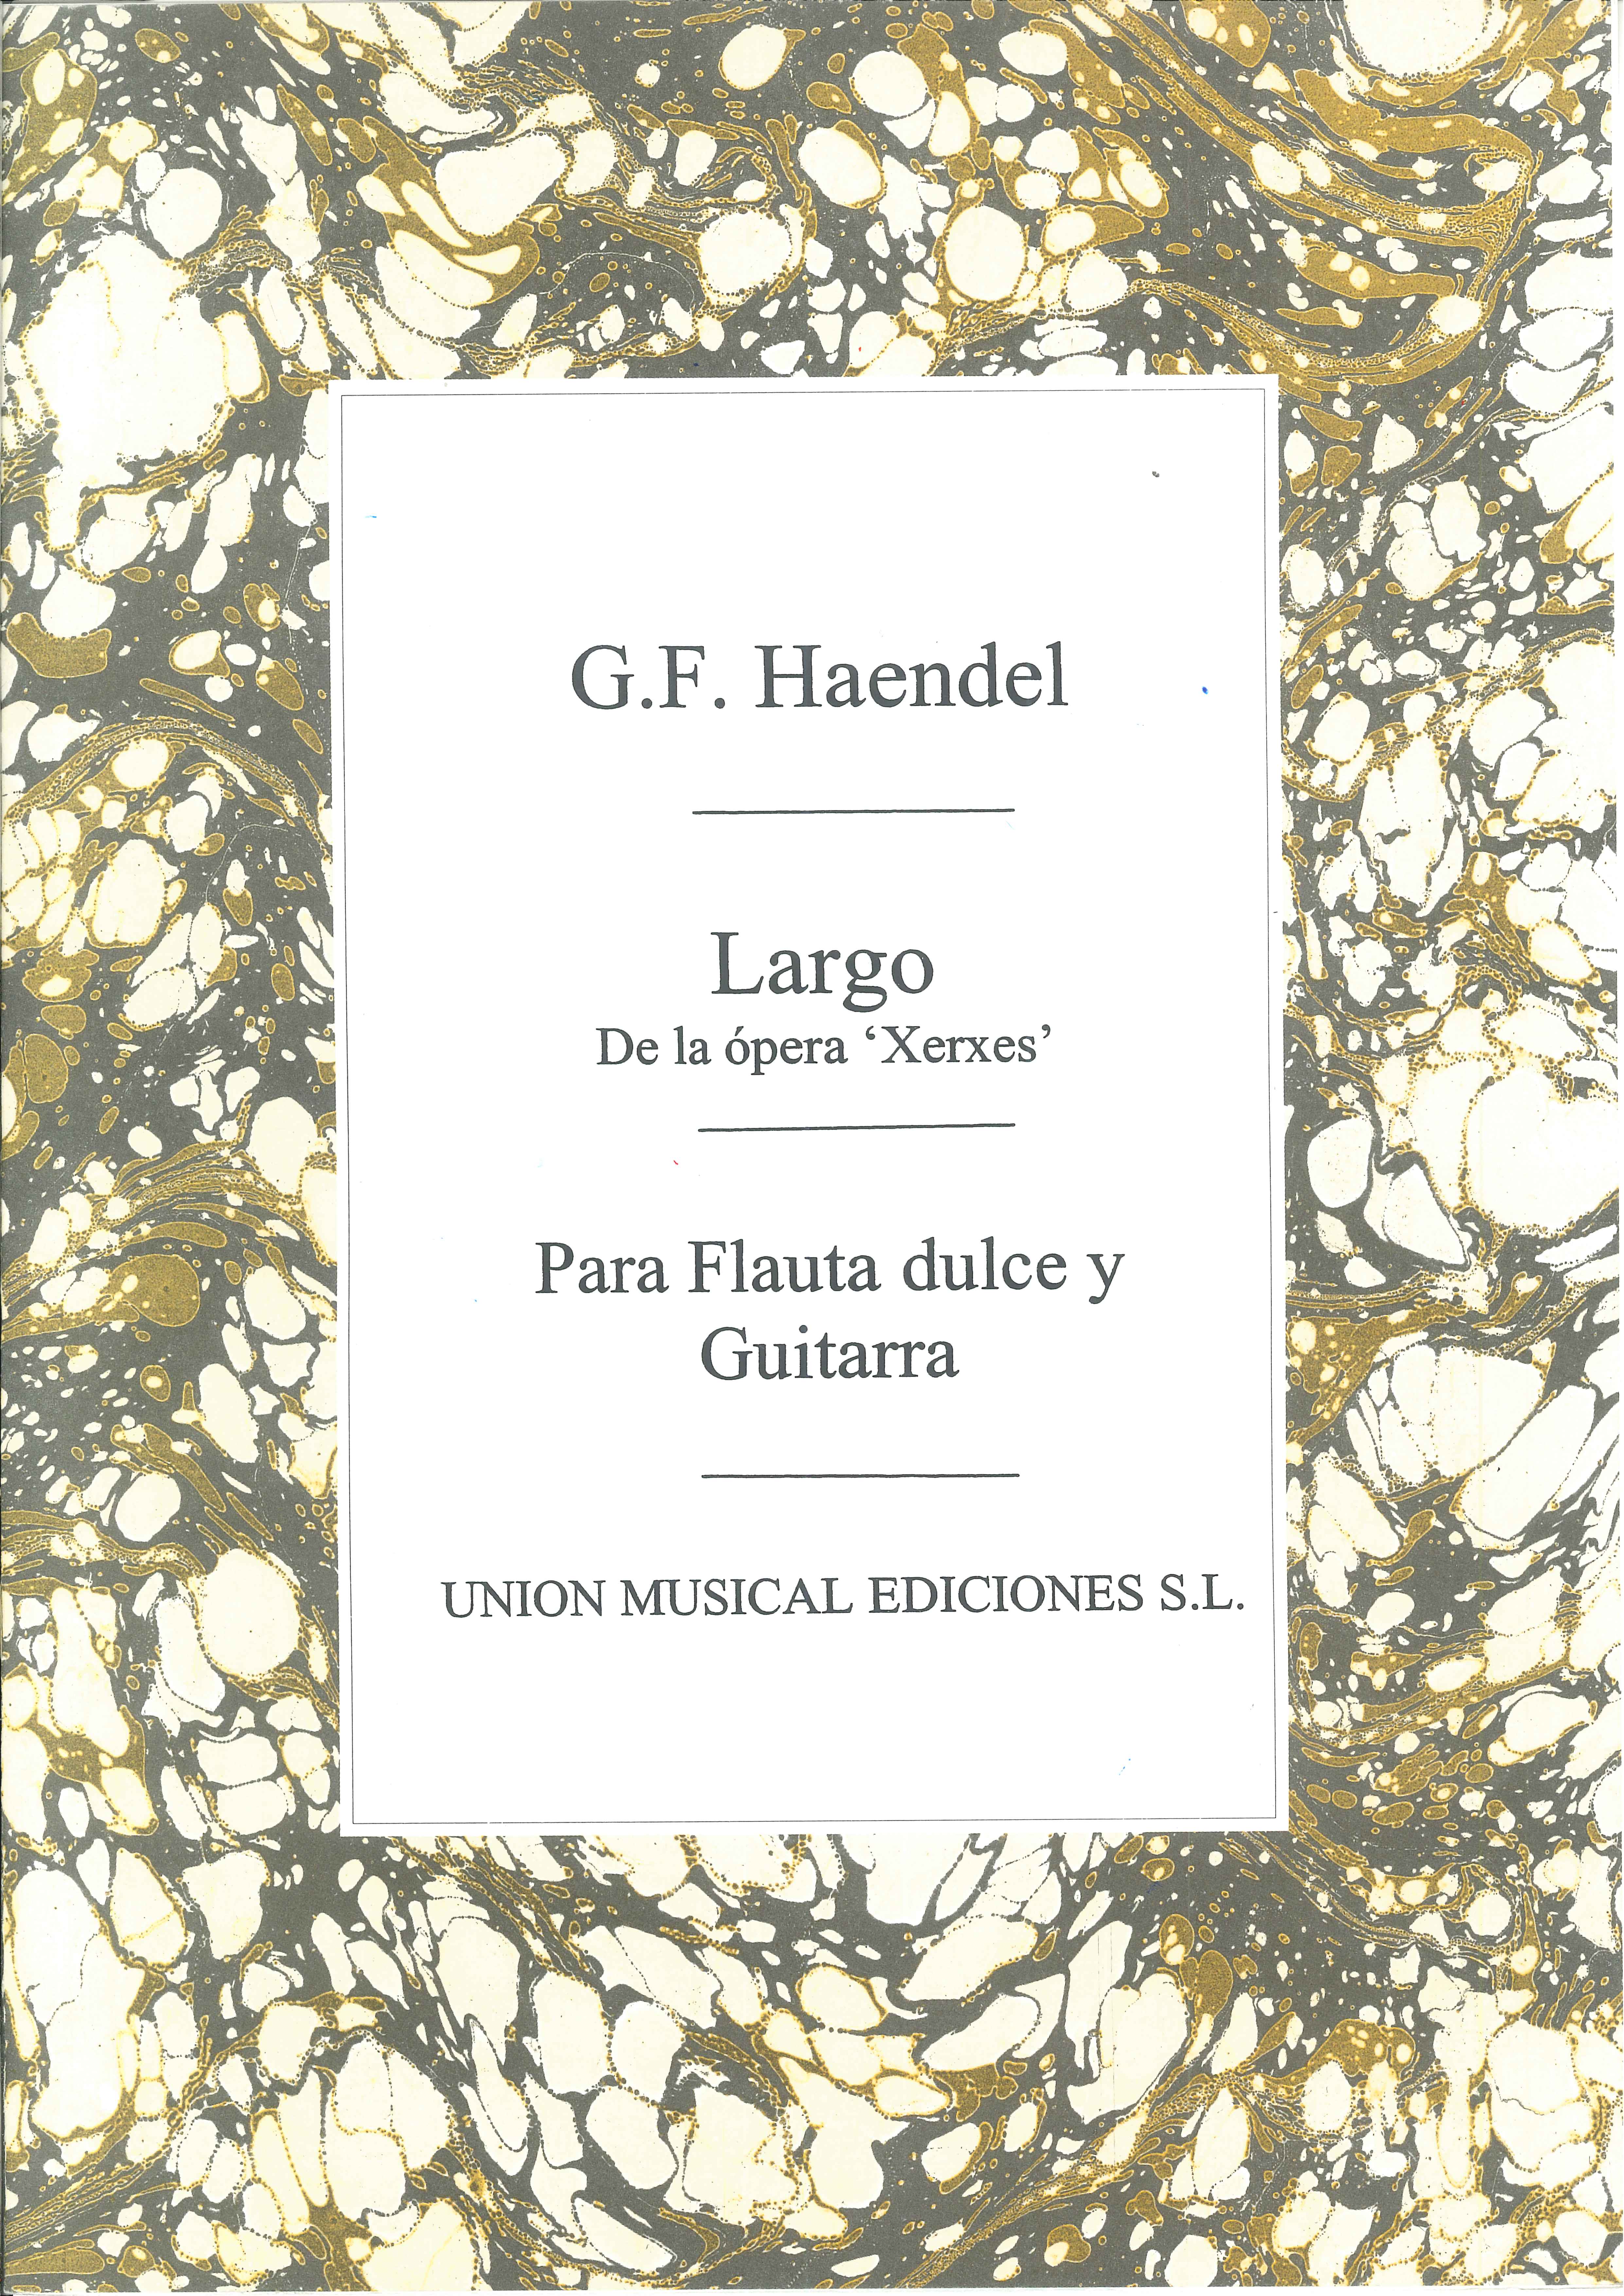 Handel Largo From Xerxes (sainz De La Maza) Guitar Sheet Music Songbook